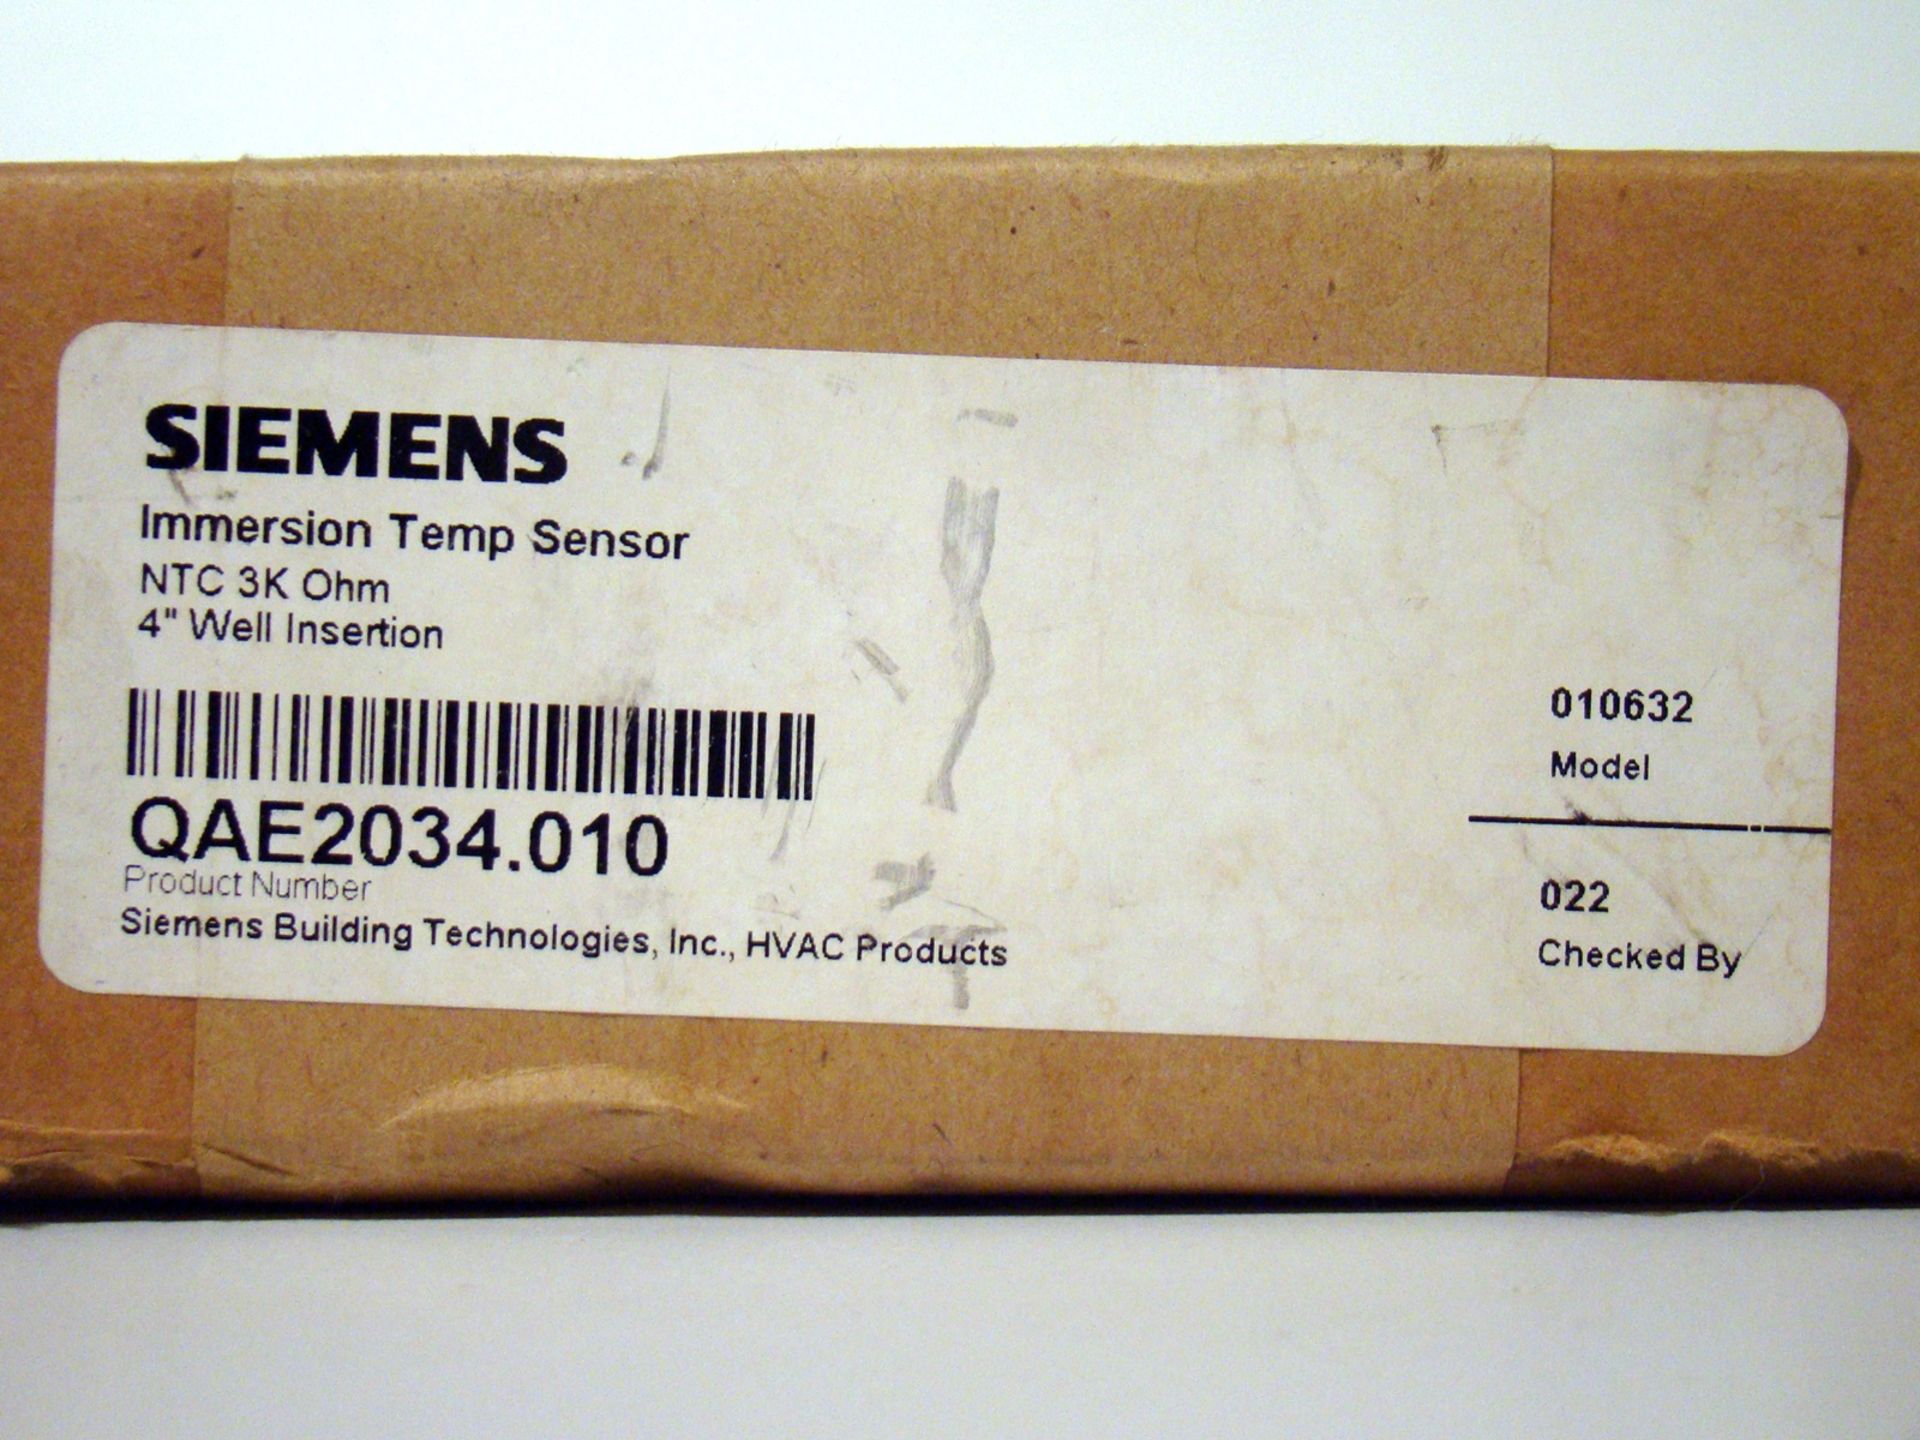 Siemens QAE2034.010 Immersion Temp Sensor - Image 2 of 2